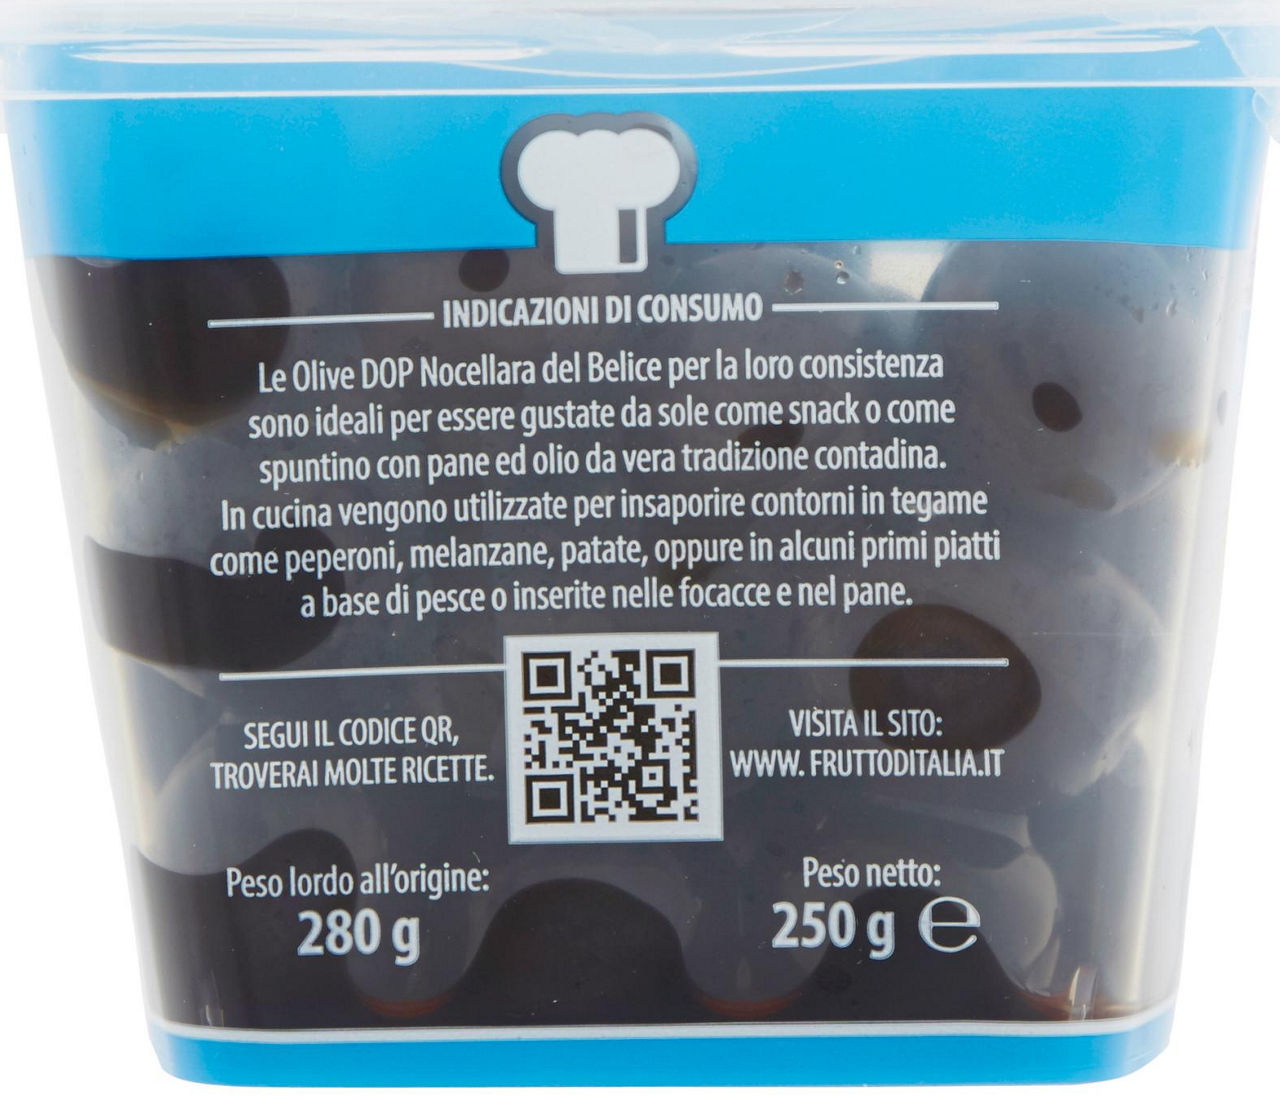 Olive dolci nere D.O.P. Nocellara del Belice Olive 250 g - 1